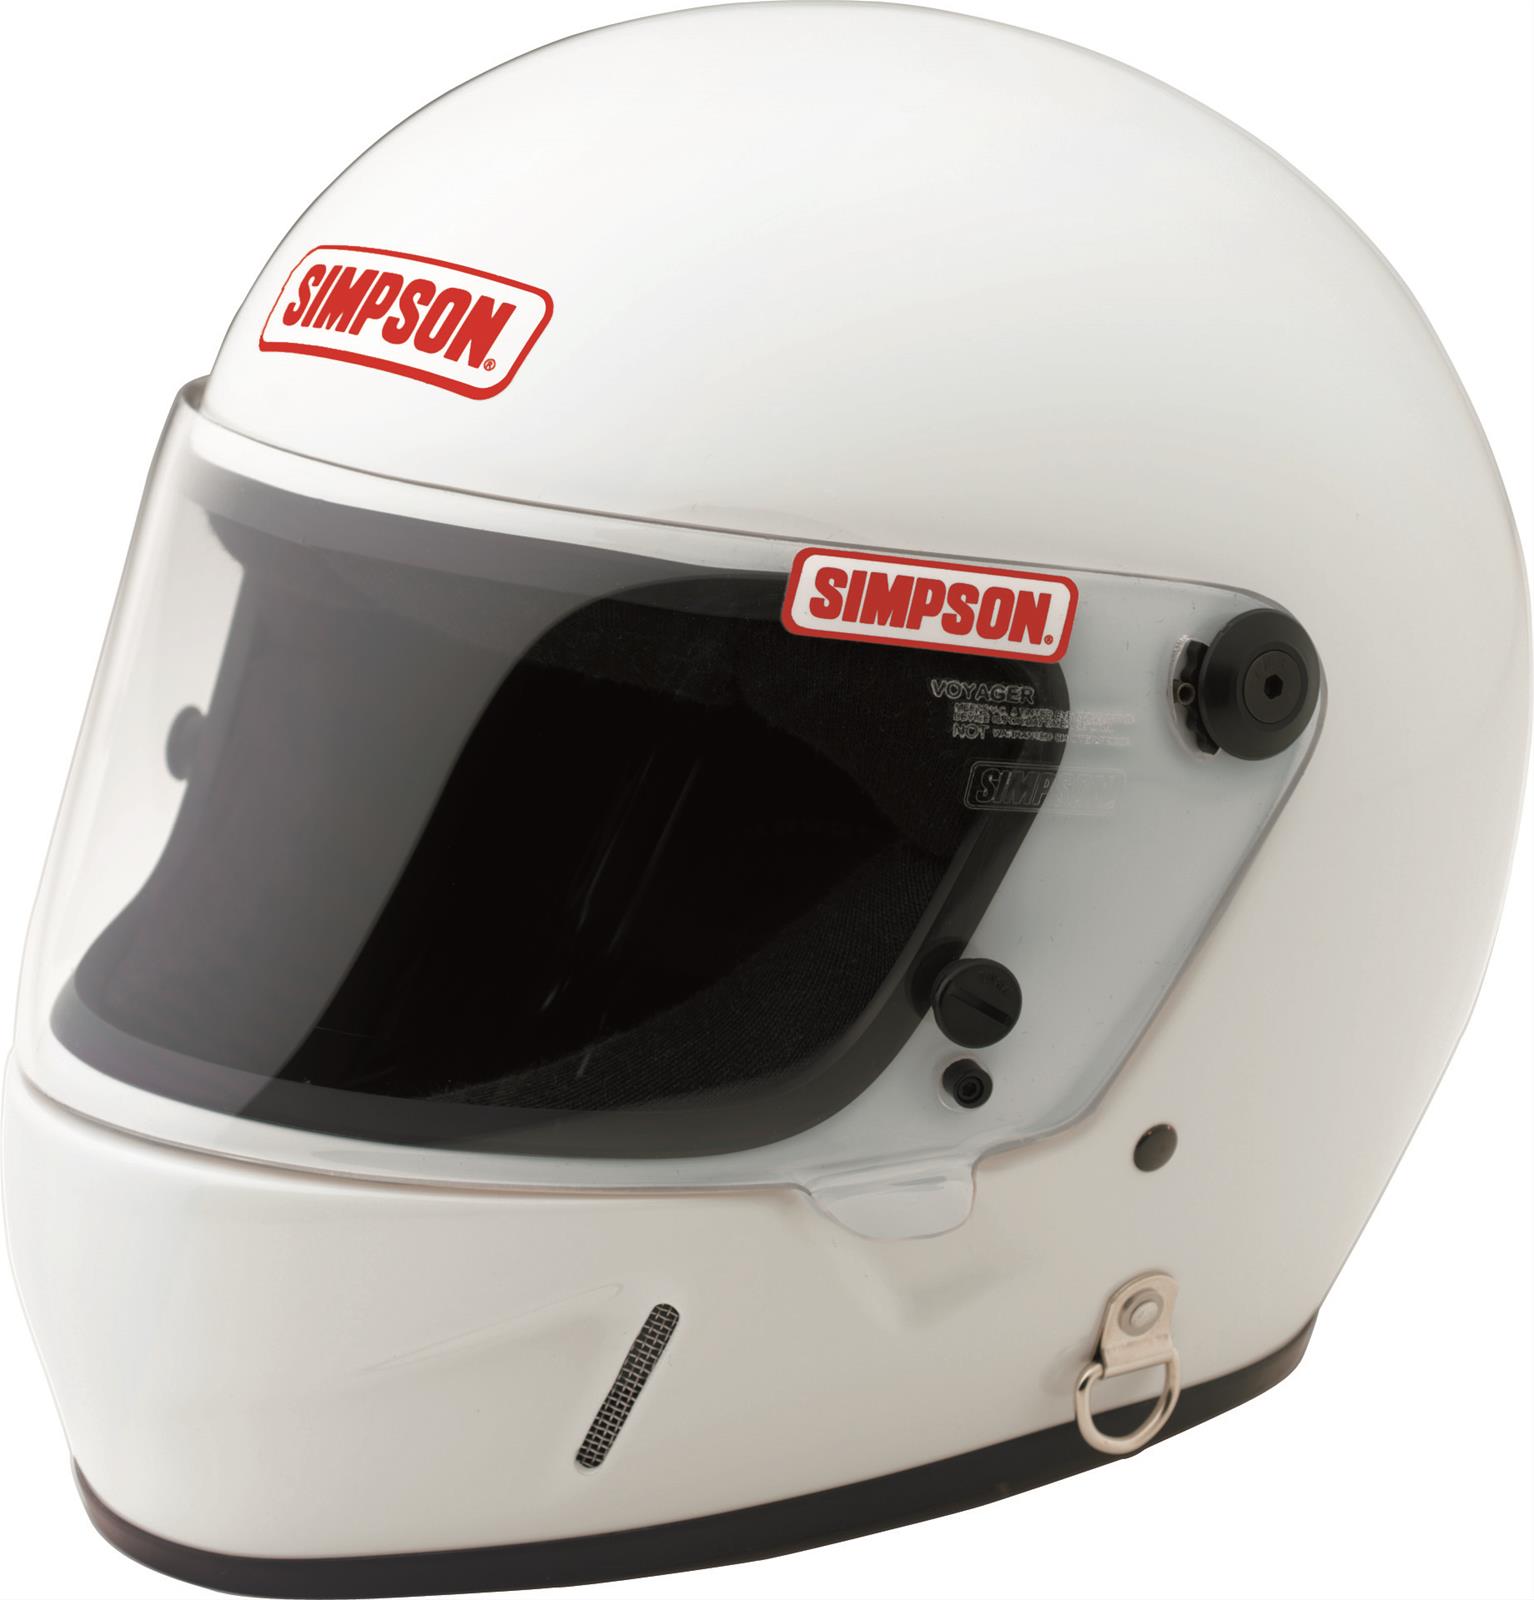 Simpson Autograph Helmet 2130001